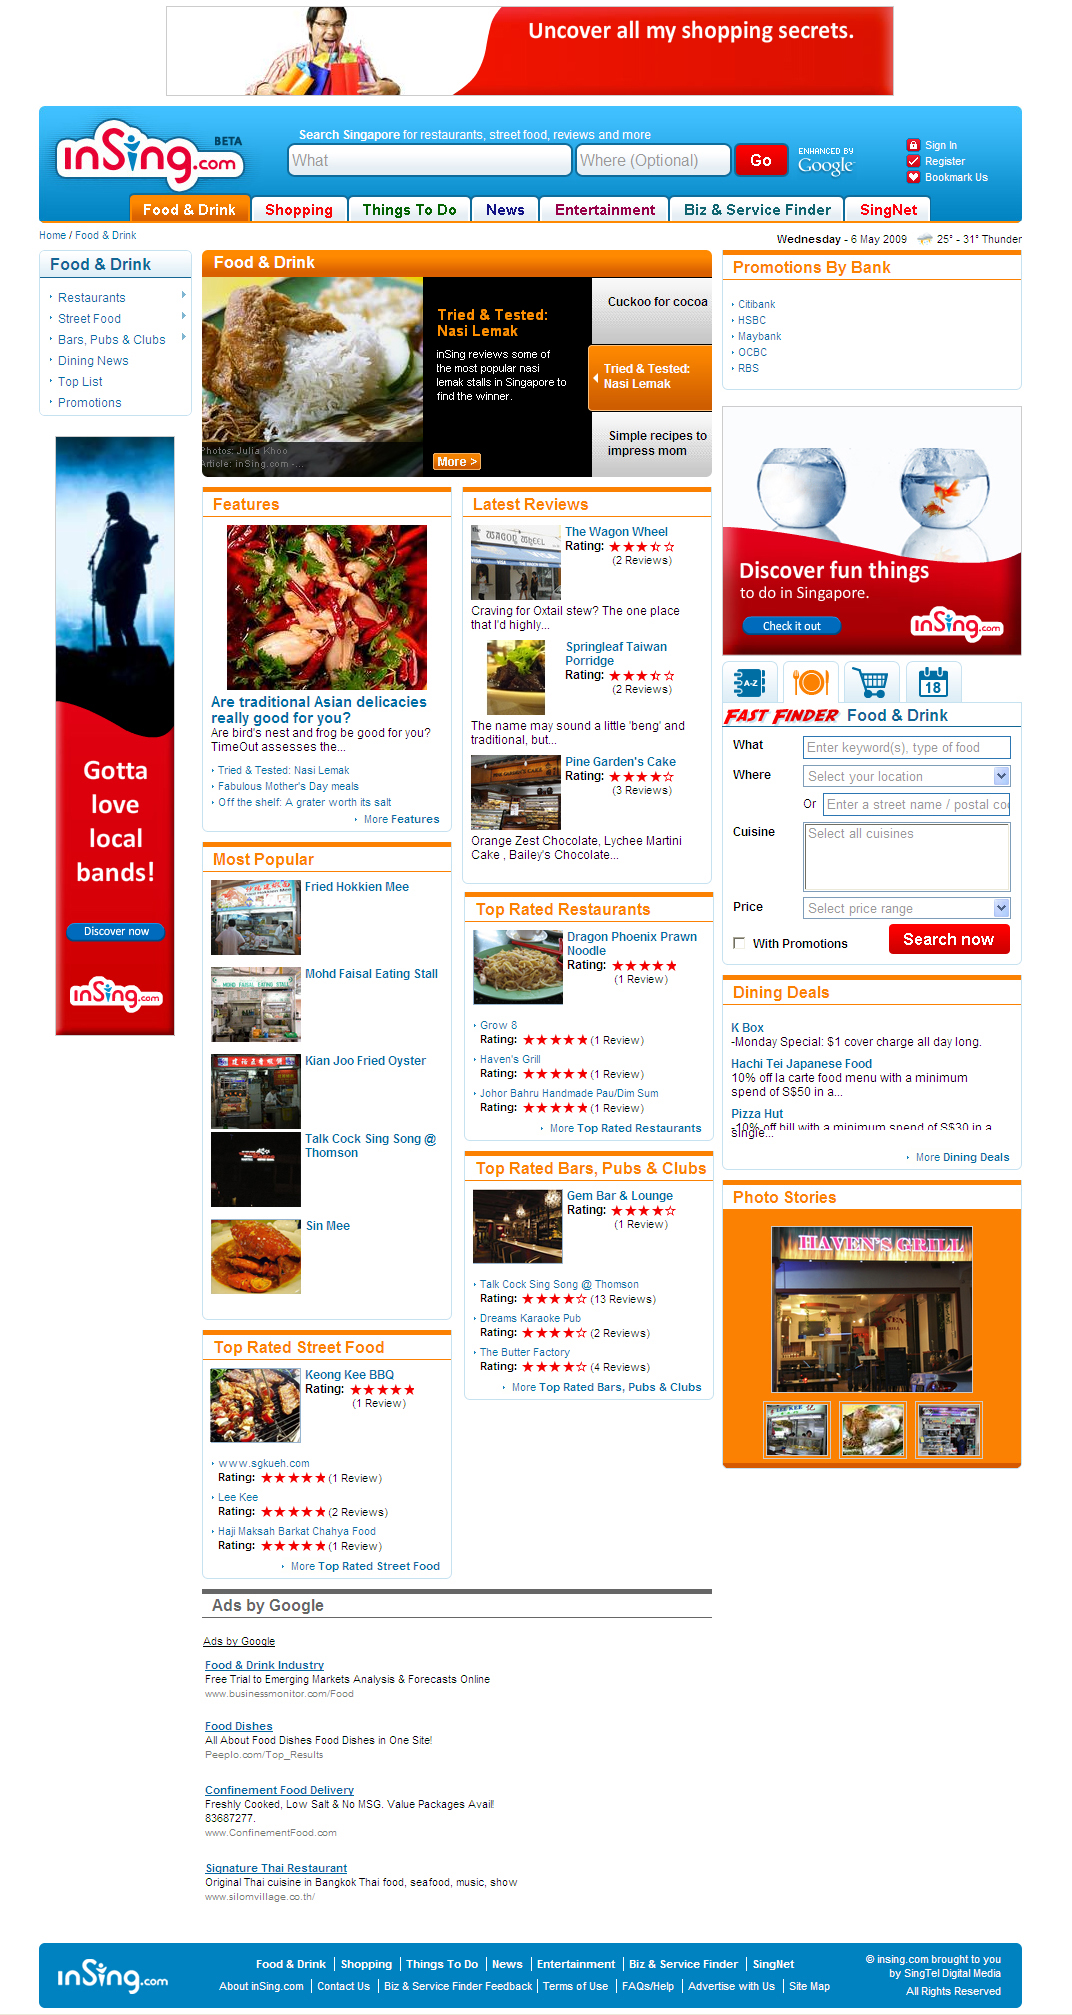 SingTel Digital Media Launches Lifestyle Web Portal - inSing.com ...